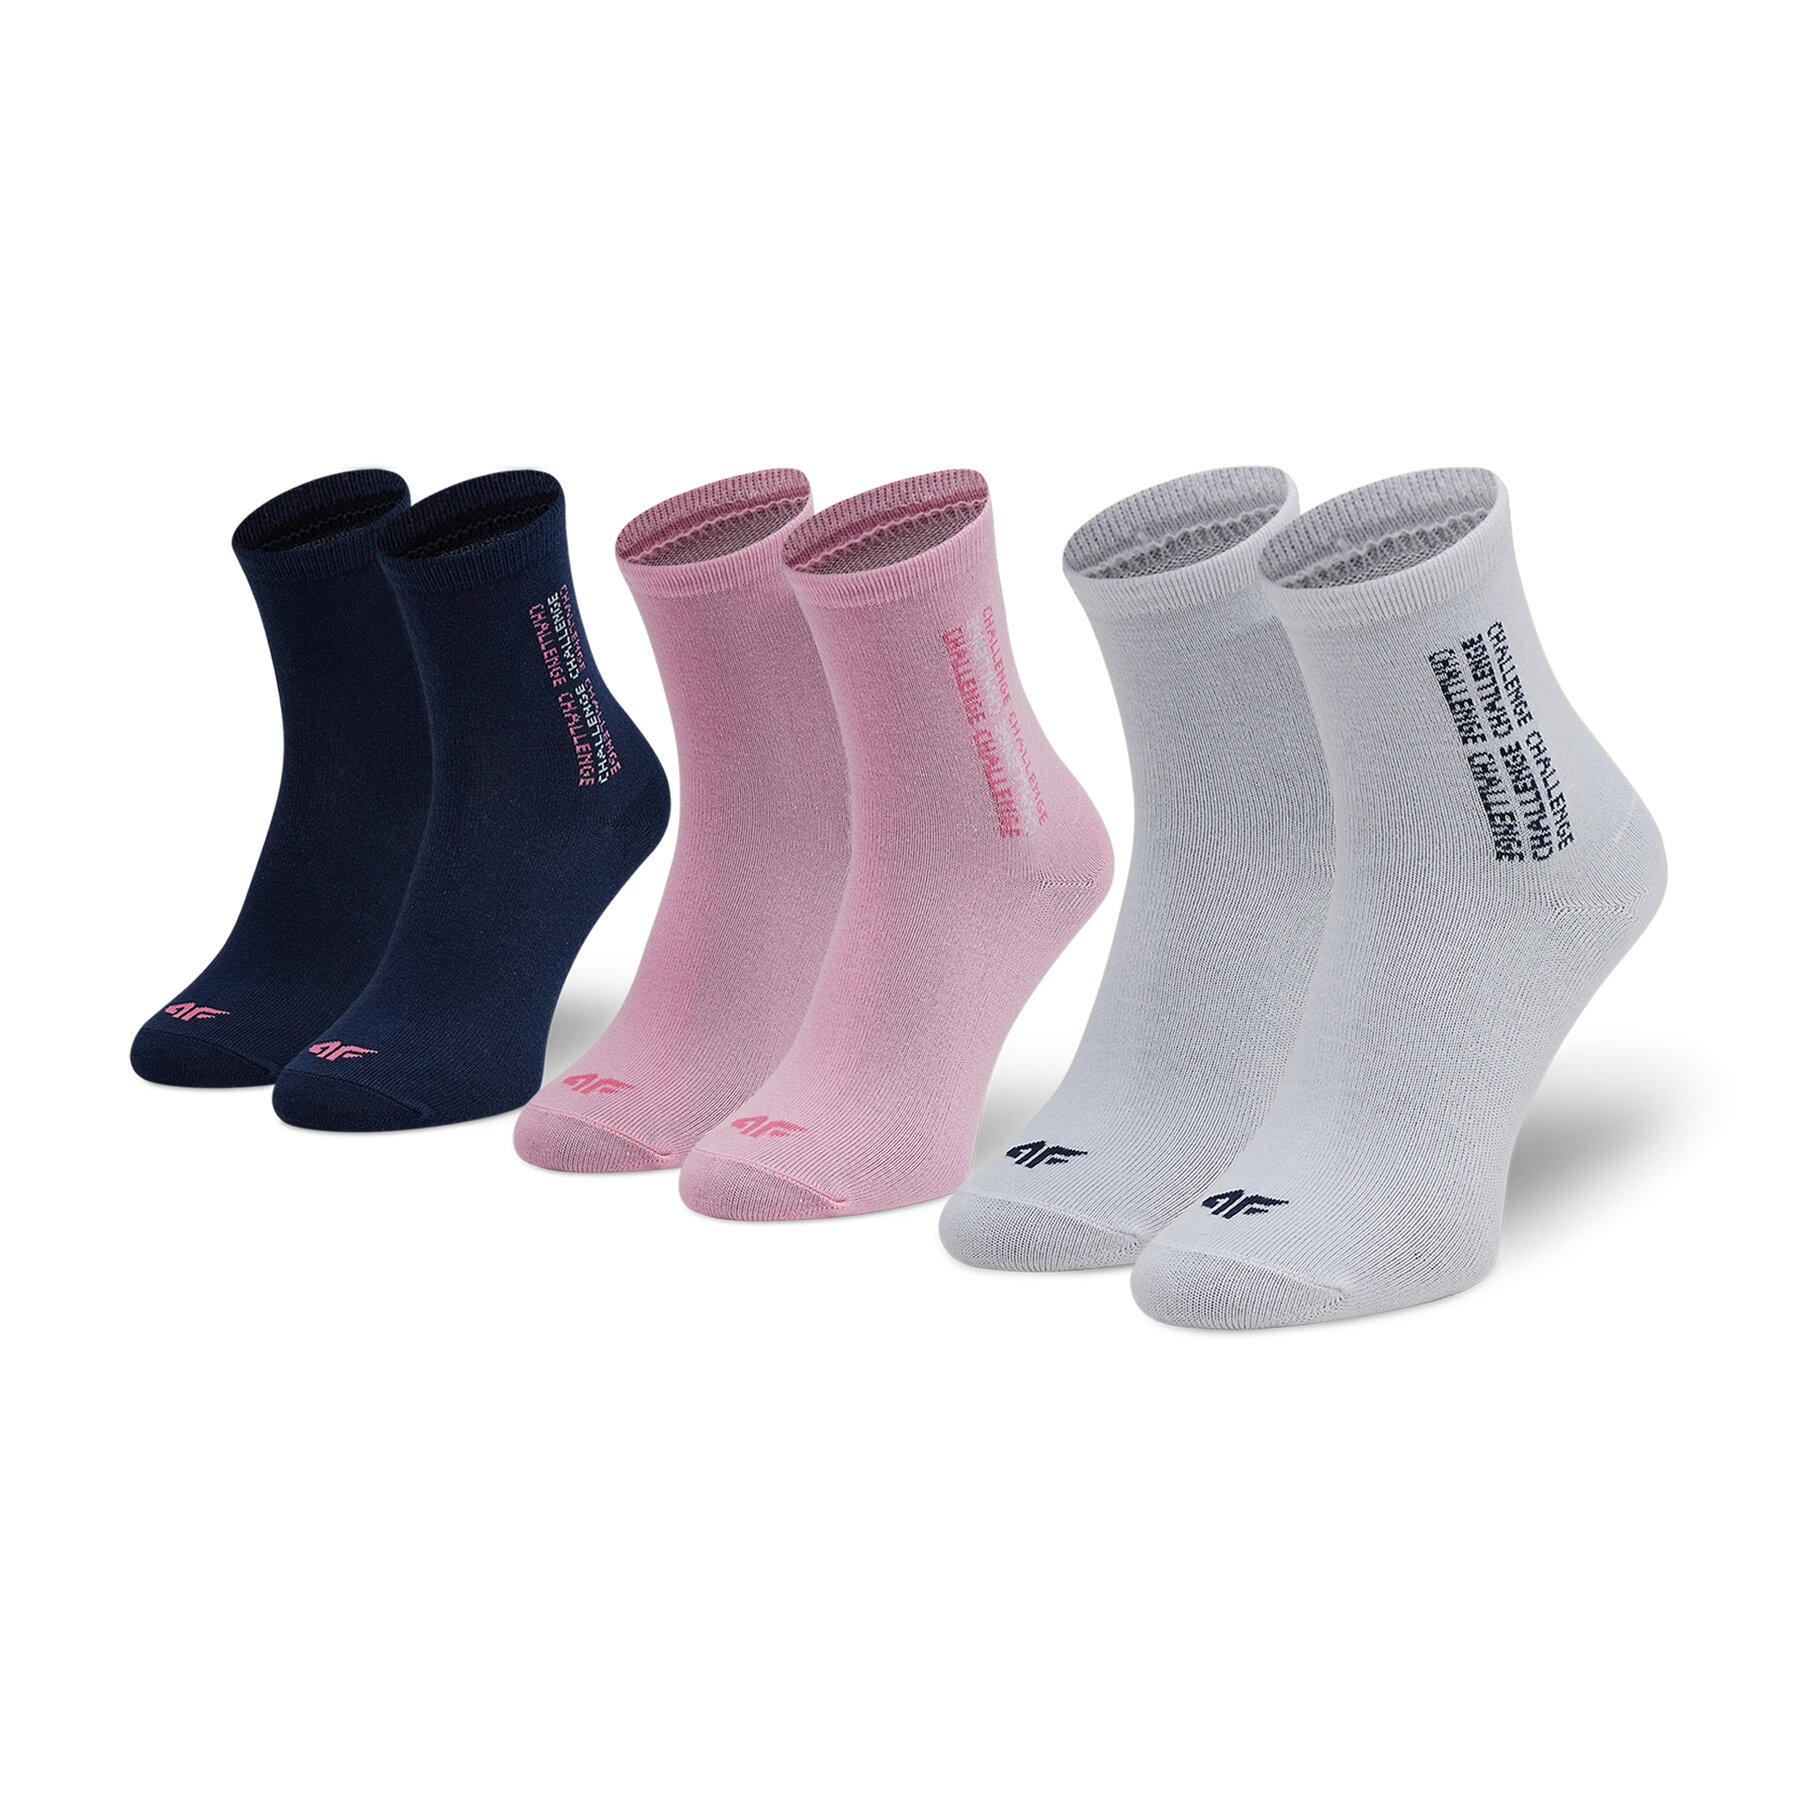 3er-Set hohe Unisex-Socken 4F HJZ21-JSOD005 Biały/Granat/Jasny Róż von 4F